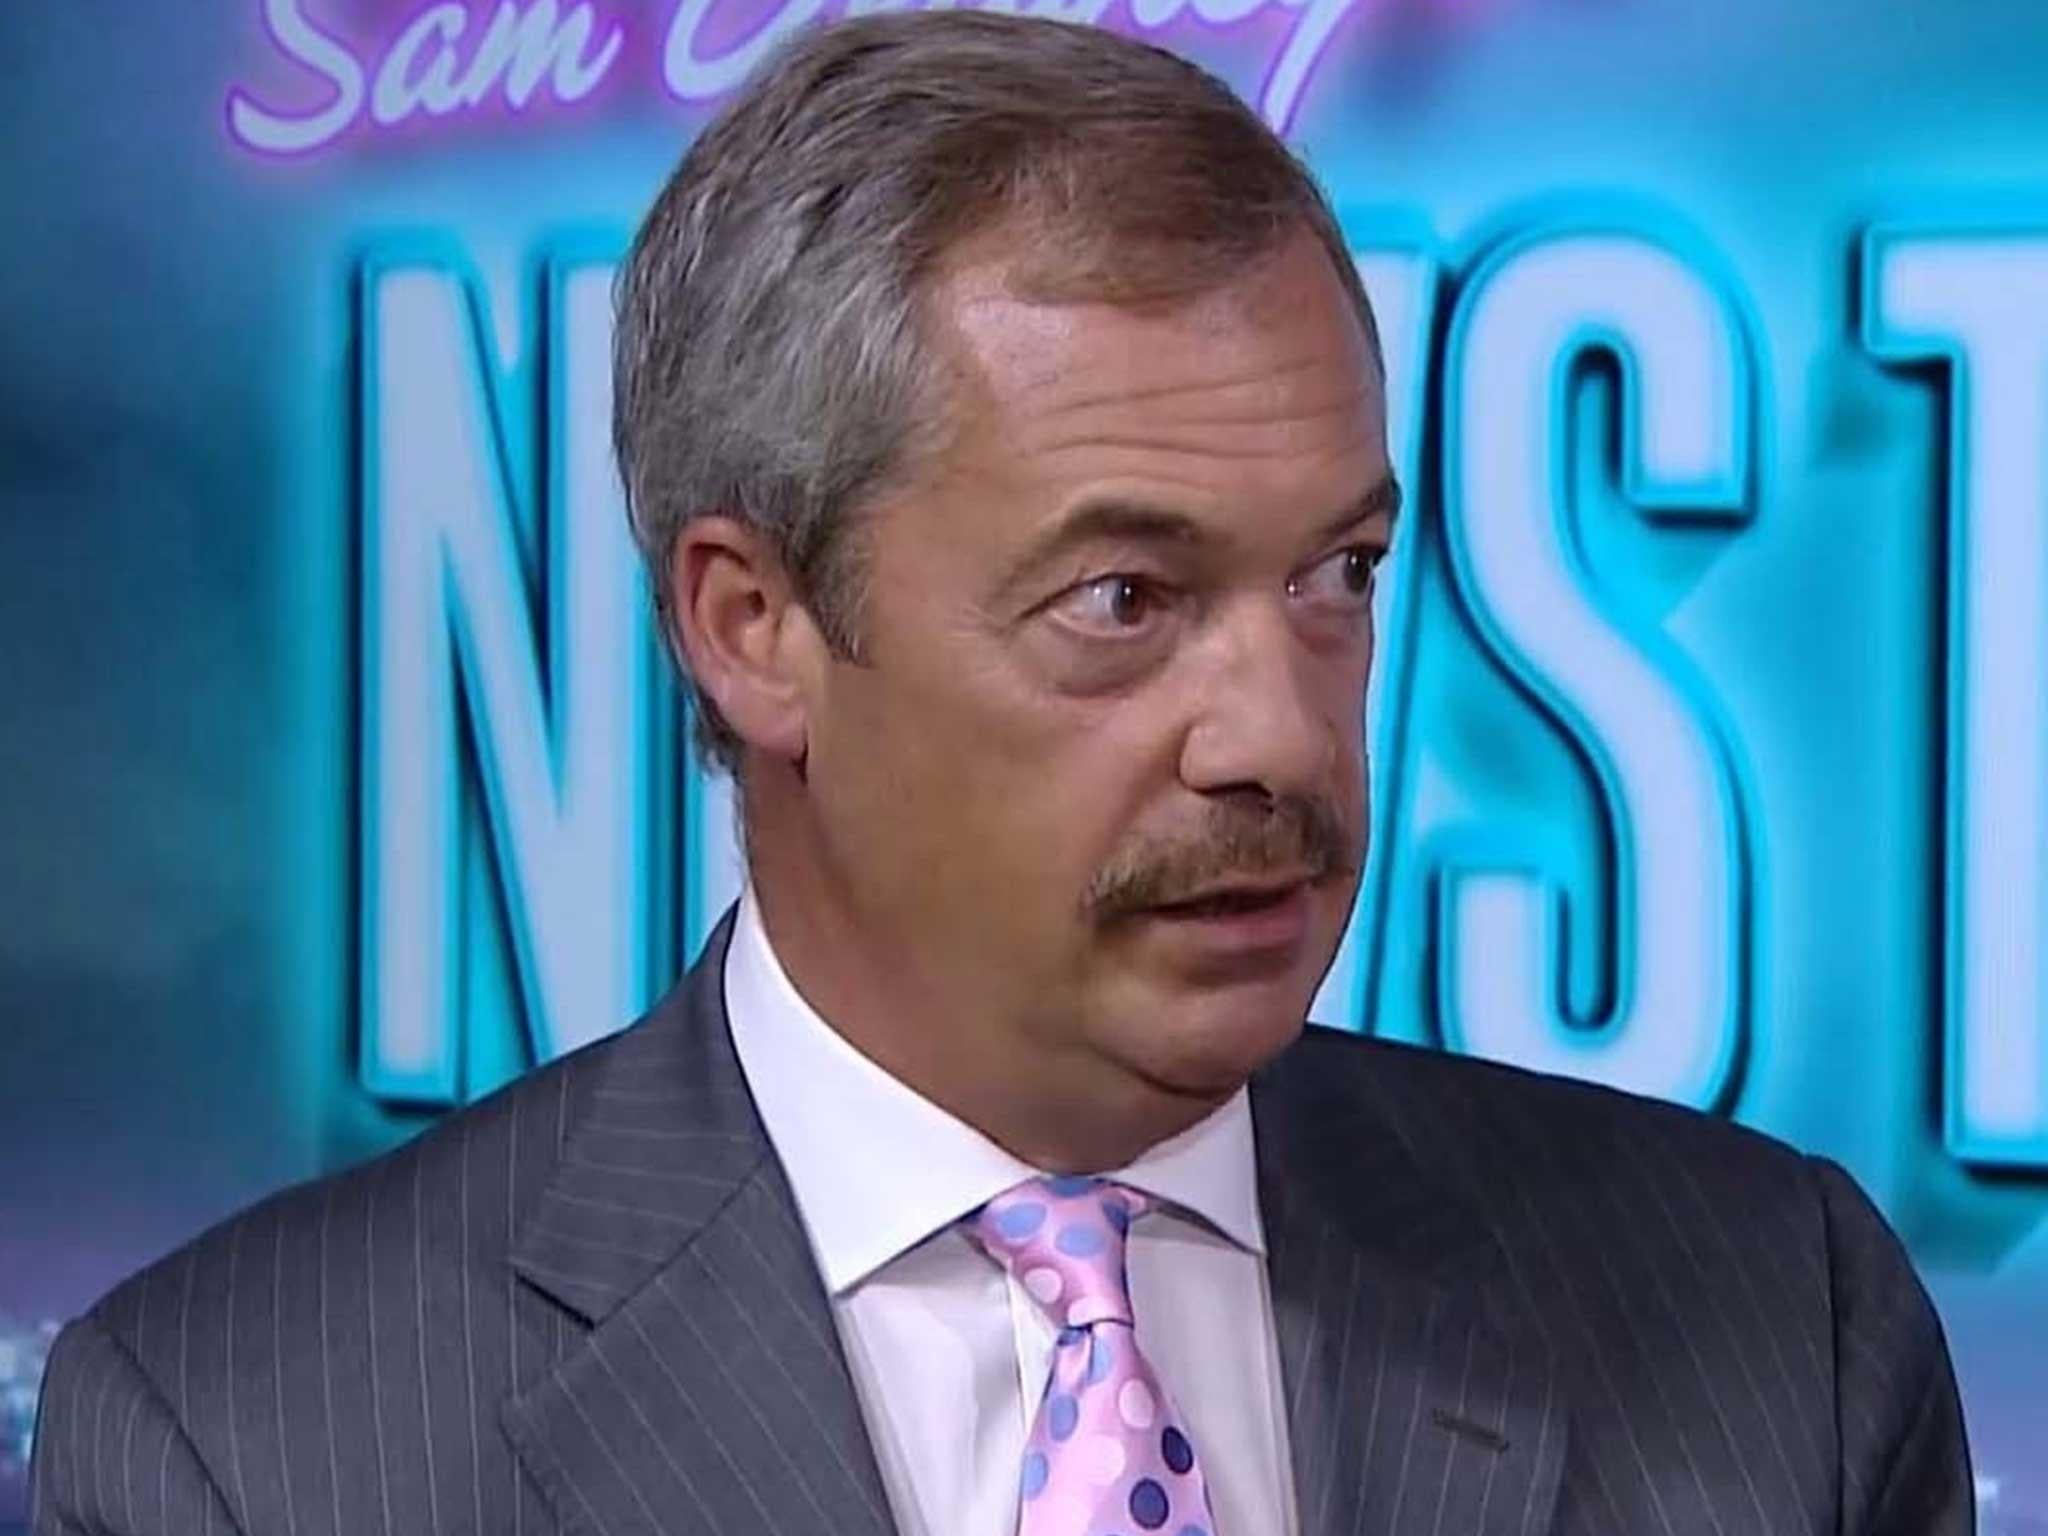 Nigel Farage appearing on Sam Delaney's News Thing on RT UK